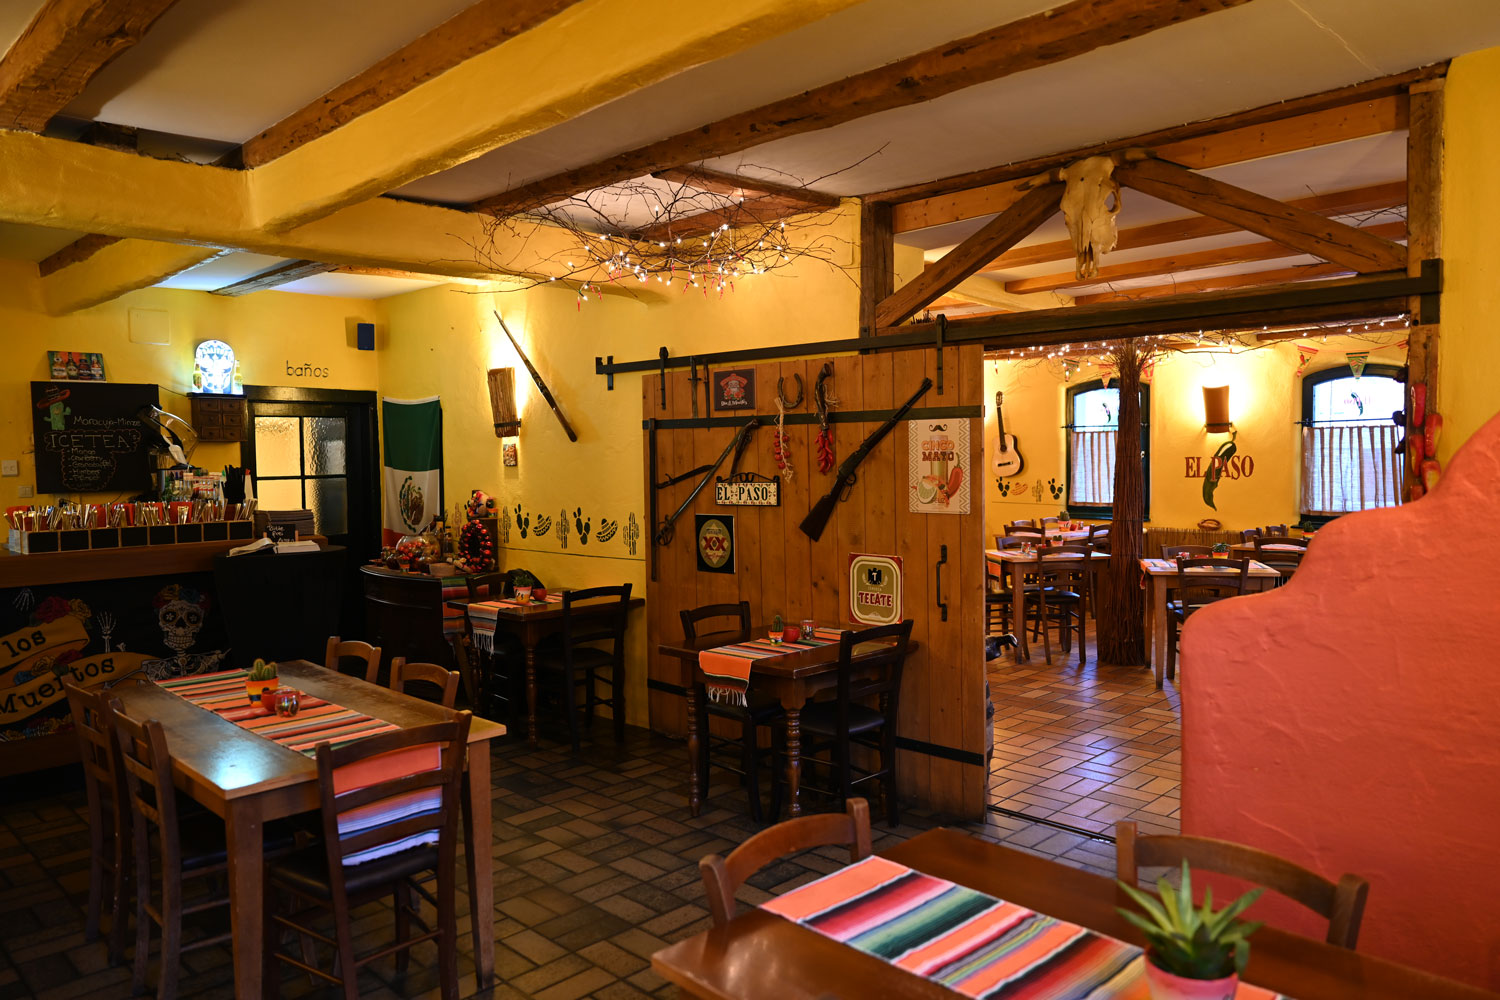 El-Paso-Mexikanisches-Restaurant-Schwabach-i